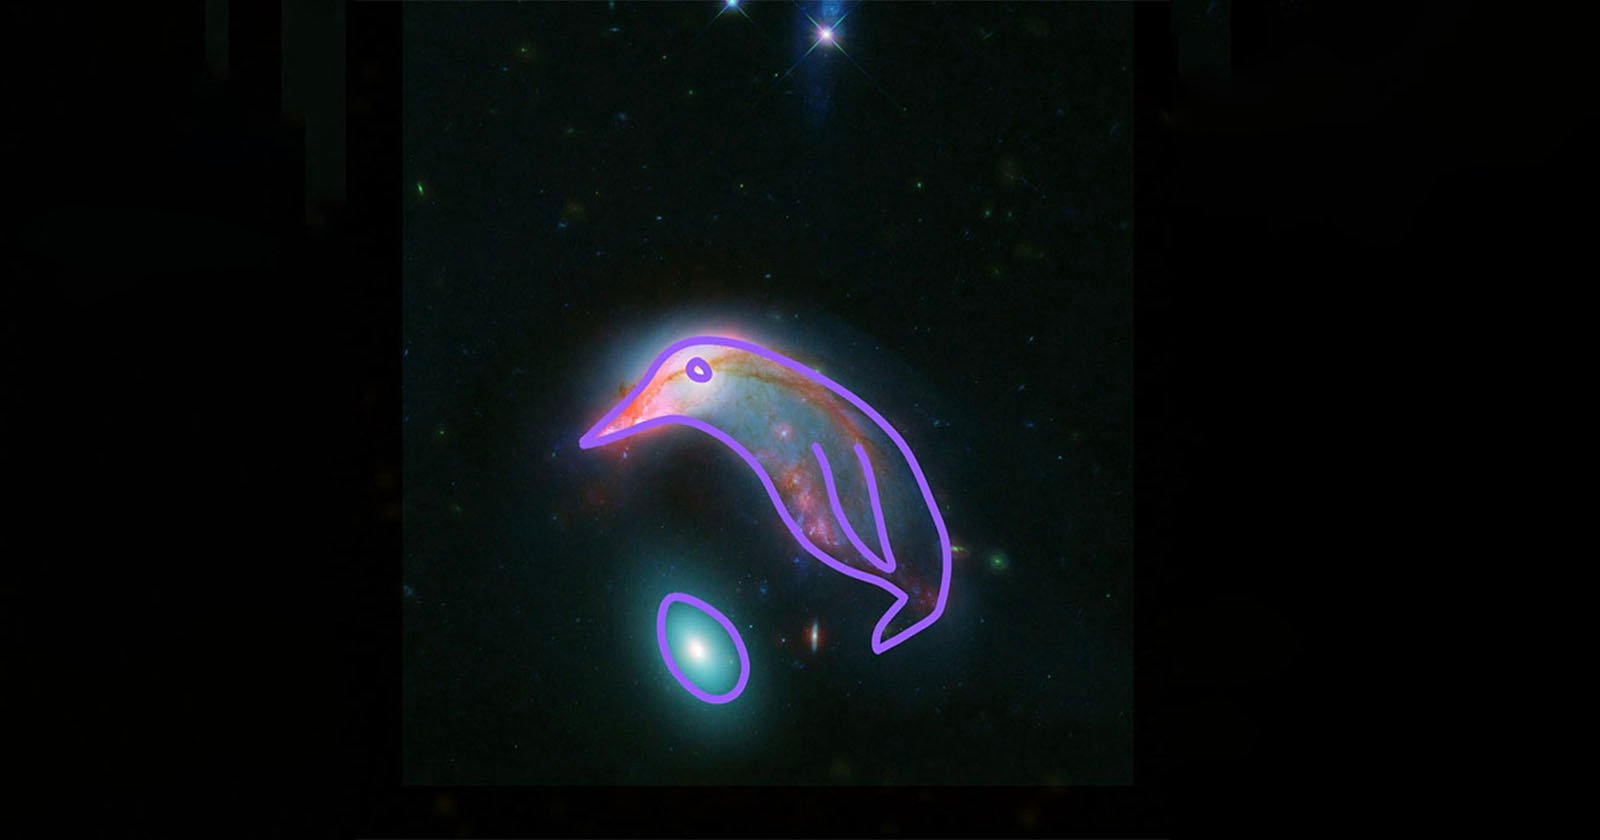  nasa shares image penguin egg shaped galaxy 